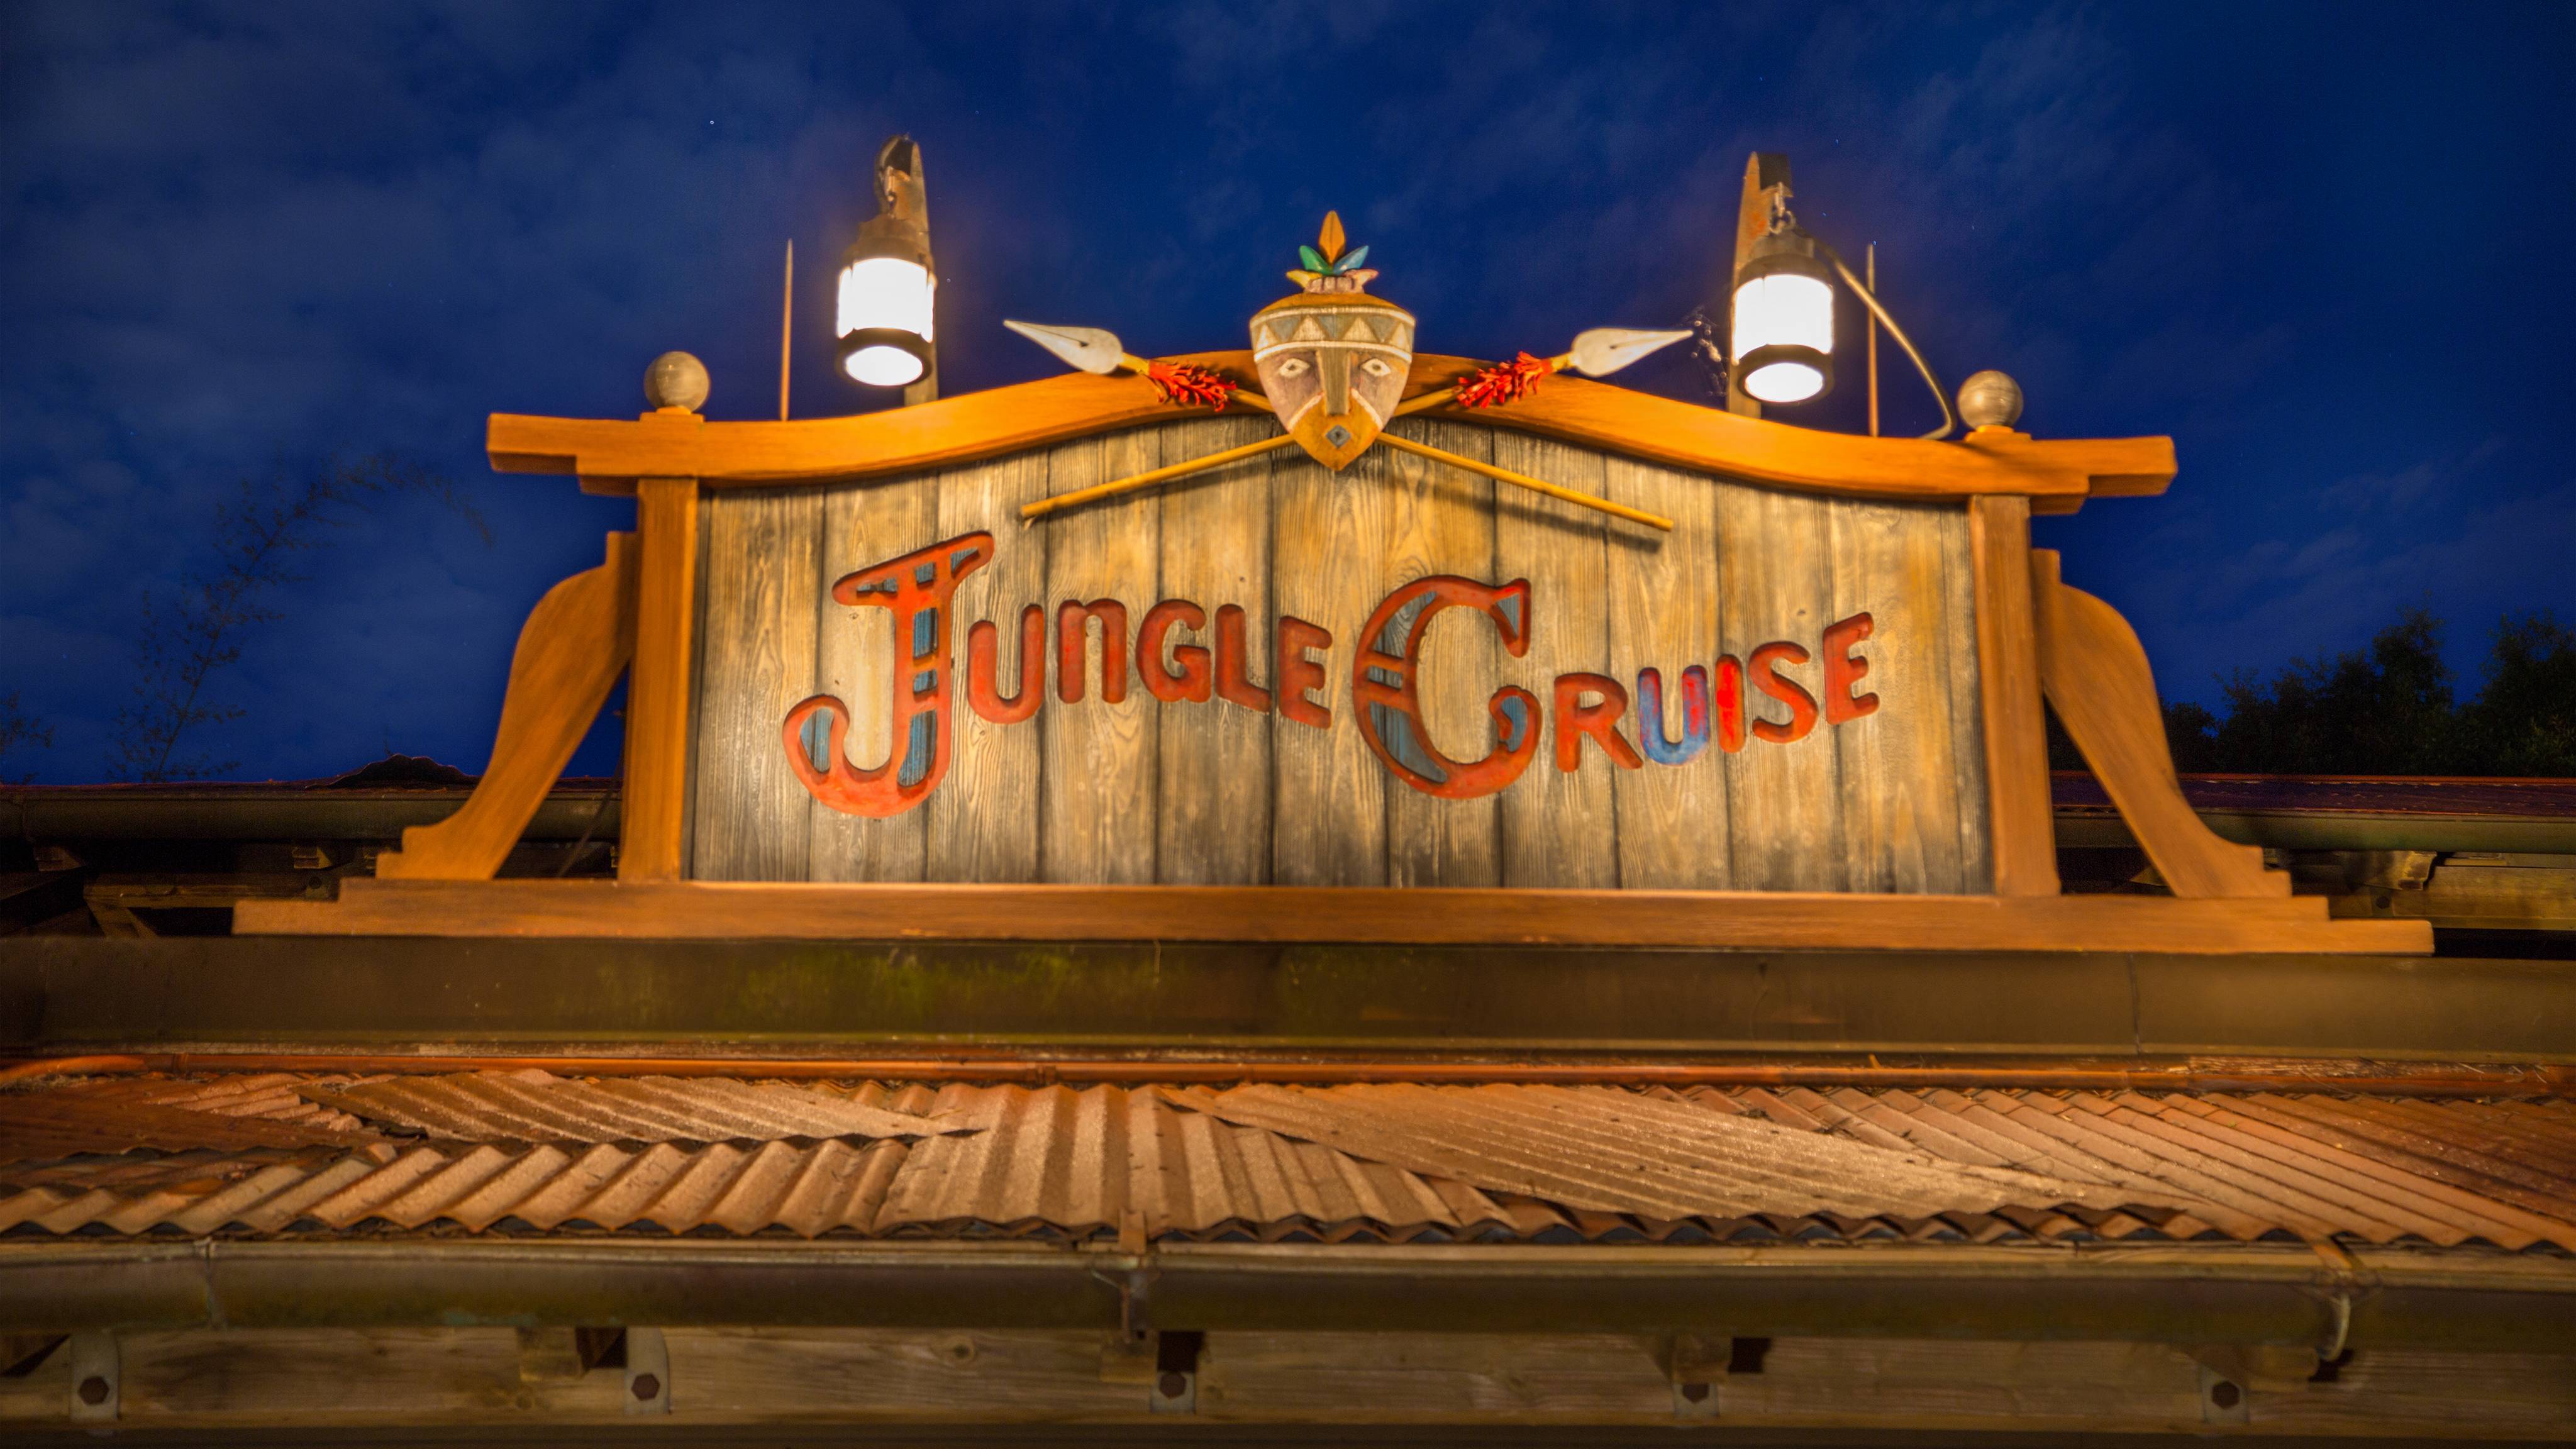 The previous Jungle Cruise main entrance sign